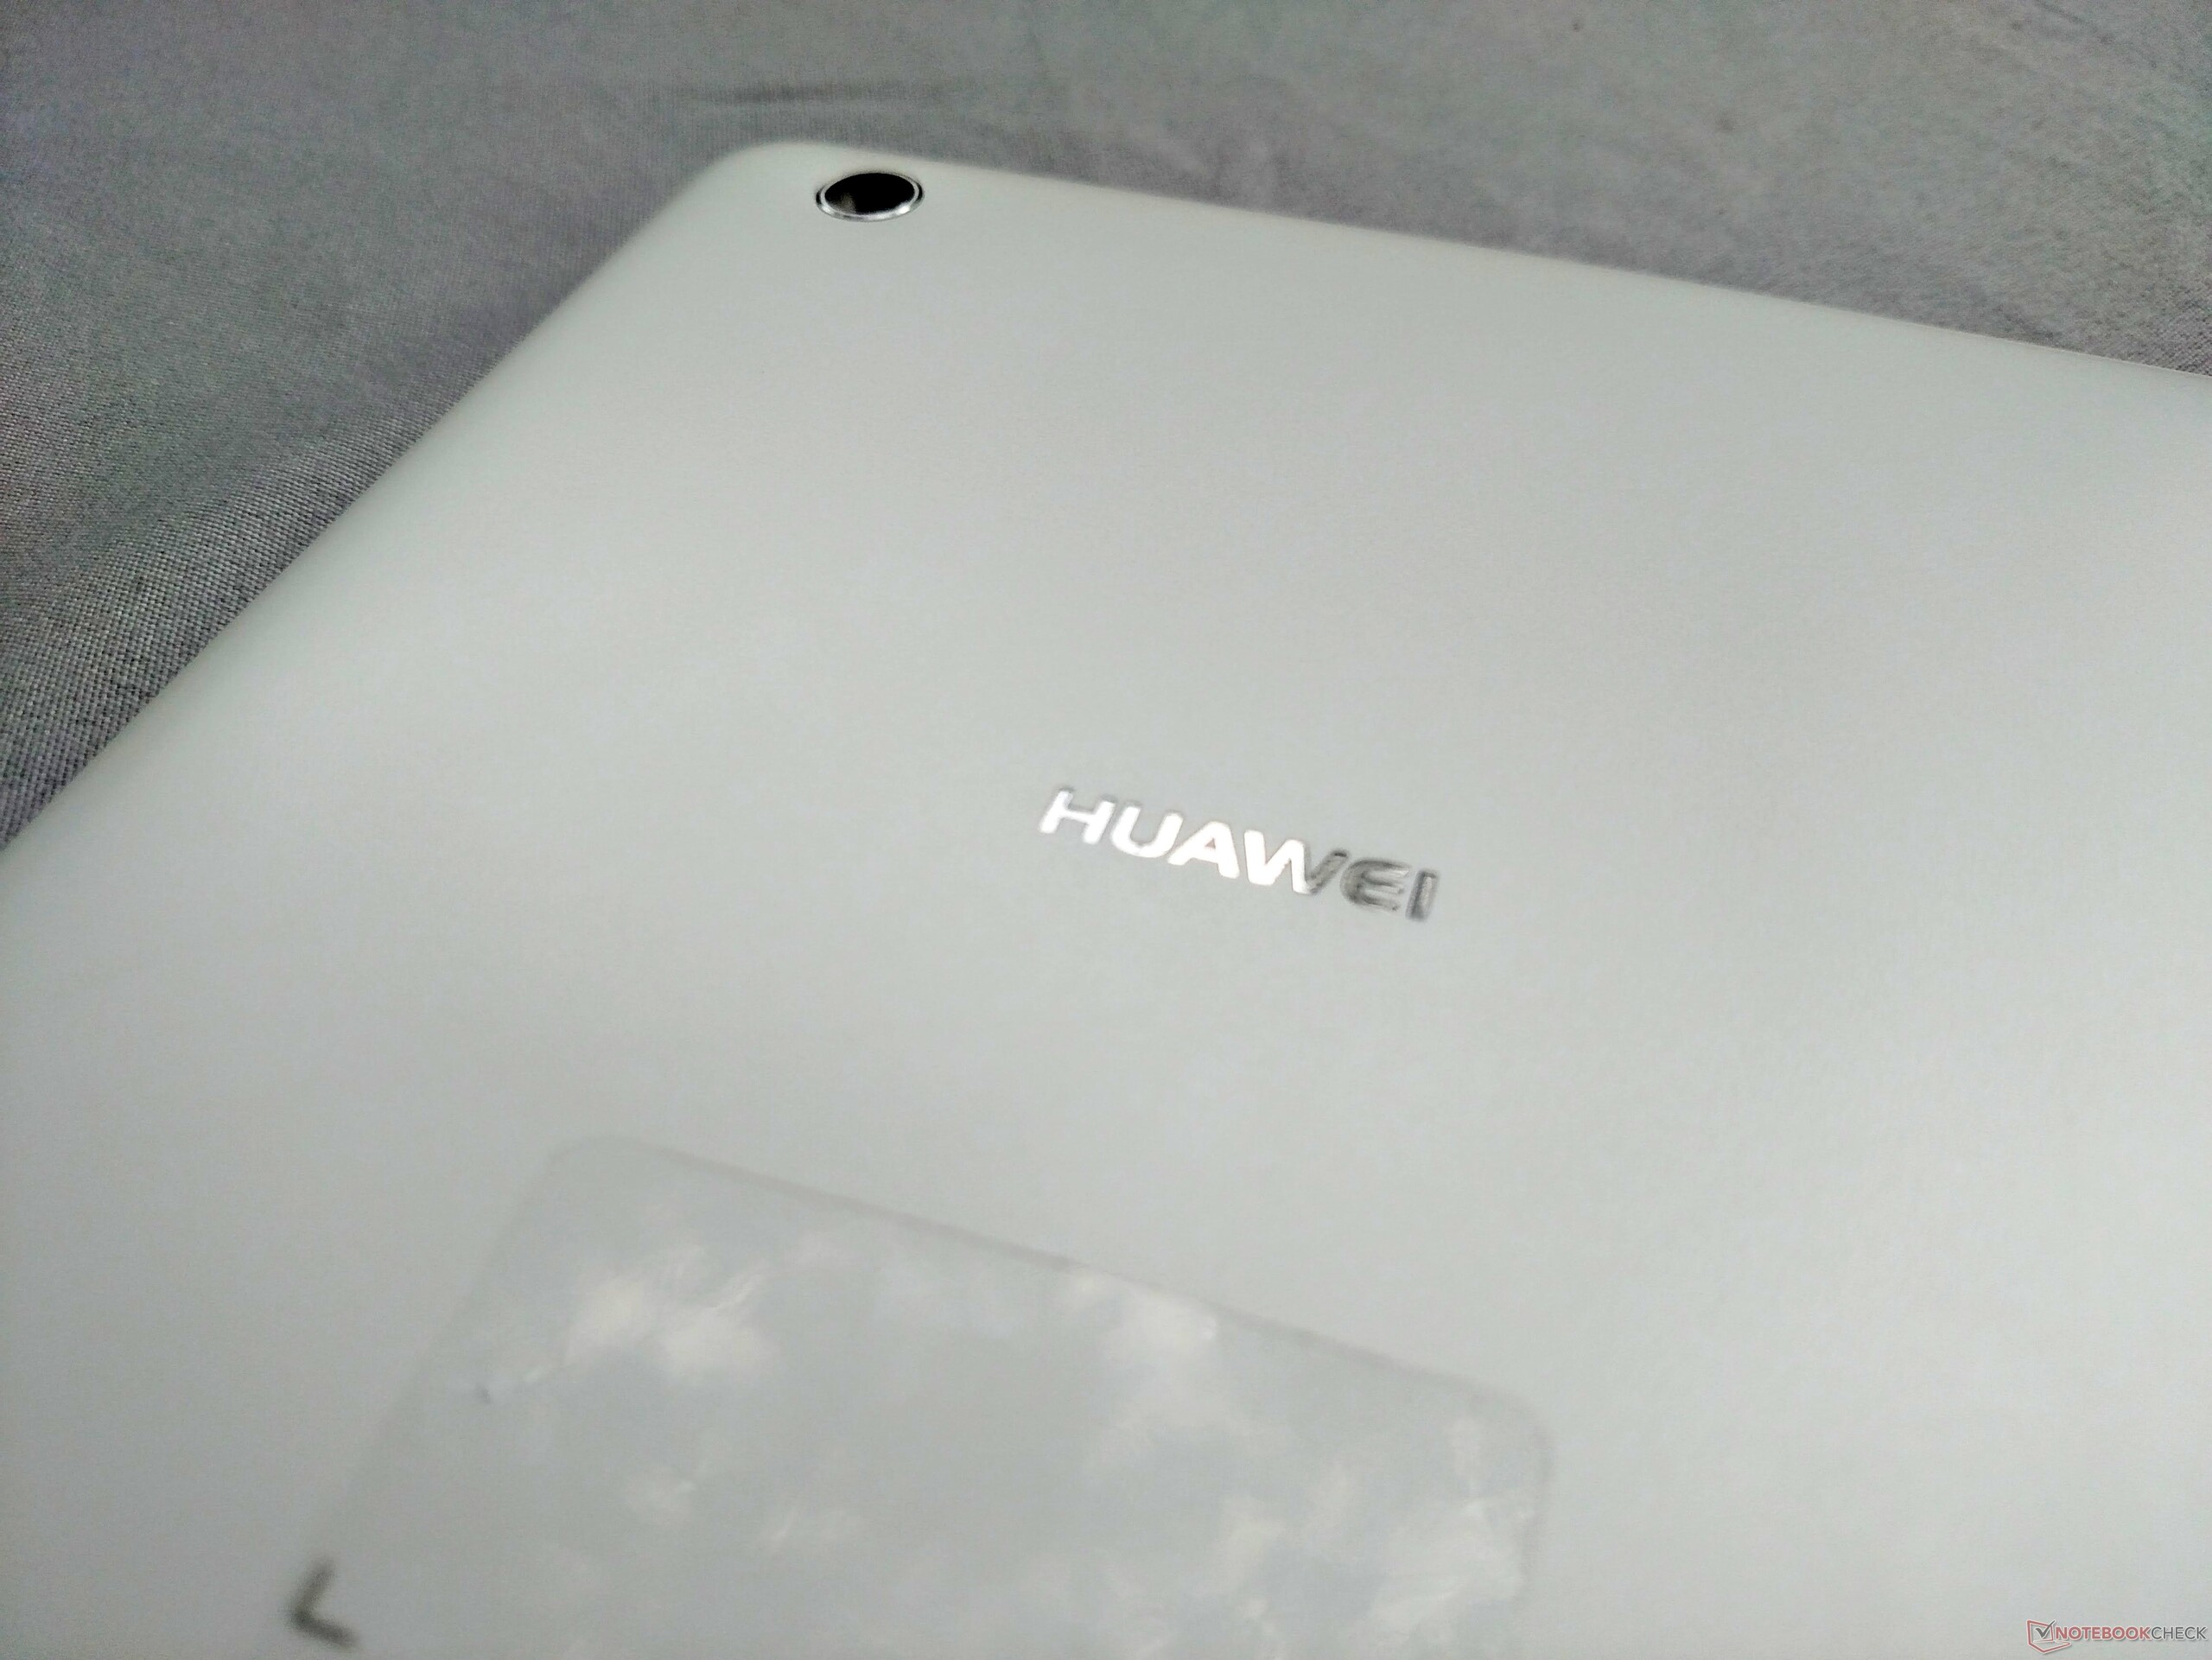 Huawei MediaPad M3 Lite 8 Tablet Review - NotebookCheck.net Reviews